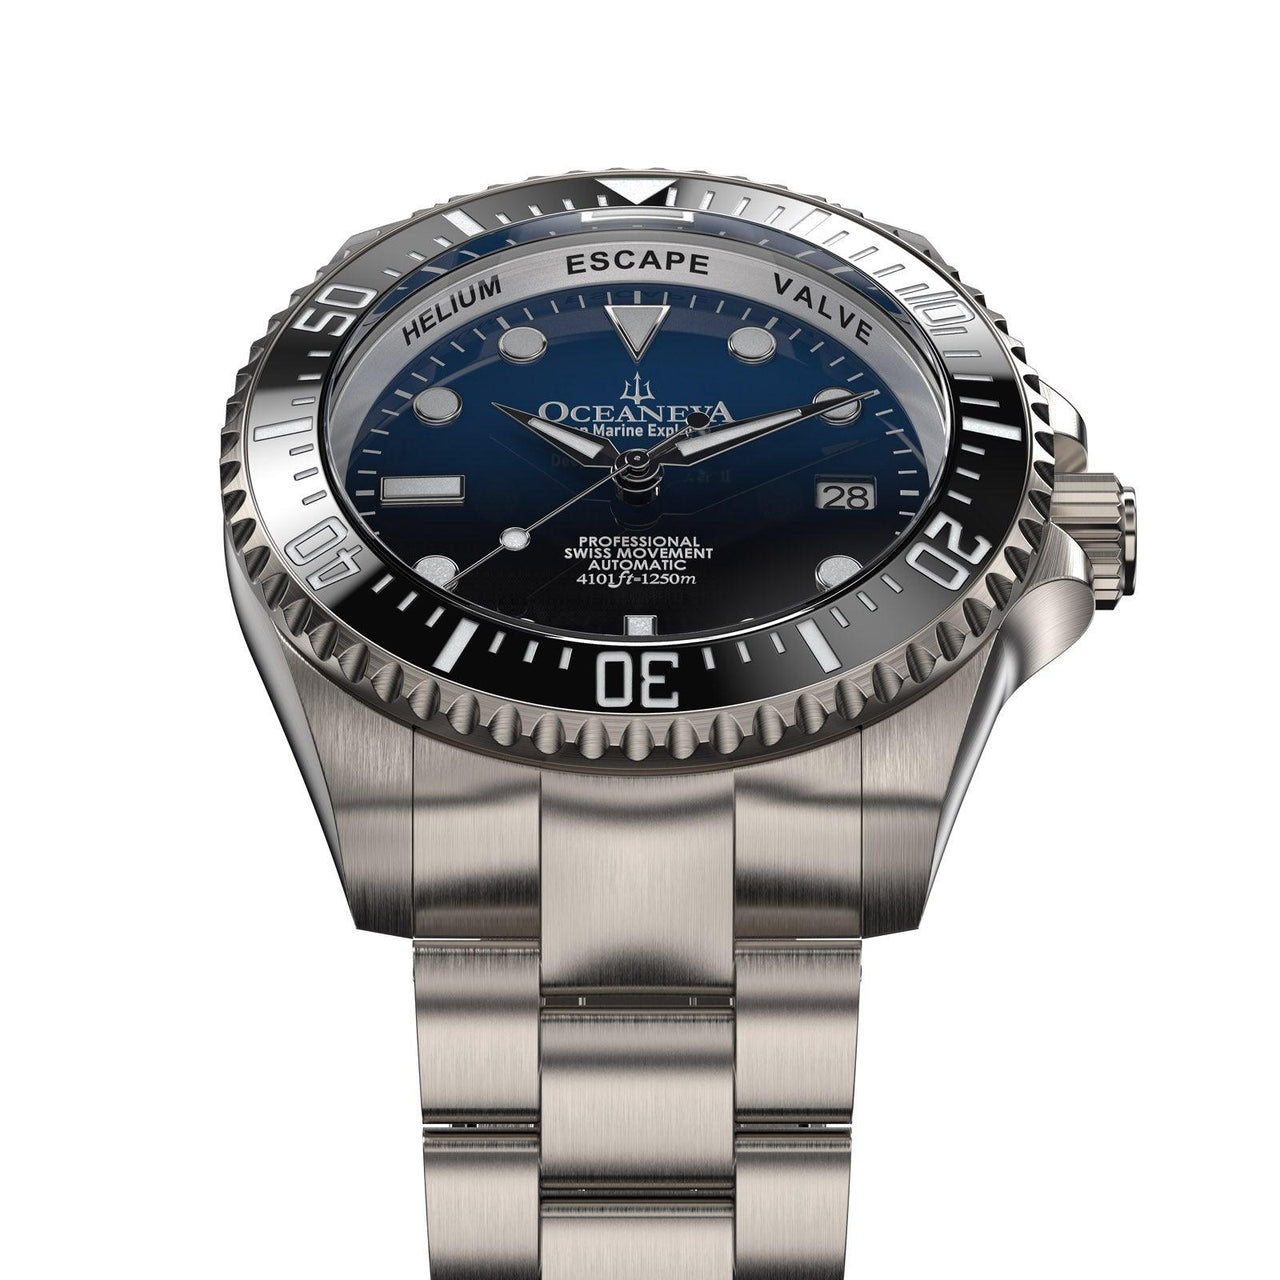 Oceaneva Deep Marine Explorer II1250M Titanium Watch Blue Black - BKIIHBLBTT Automatic watches, Blue and black dial, mens titanium watch, Titanium Watch, titanium watches for men